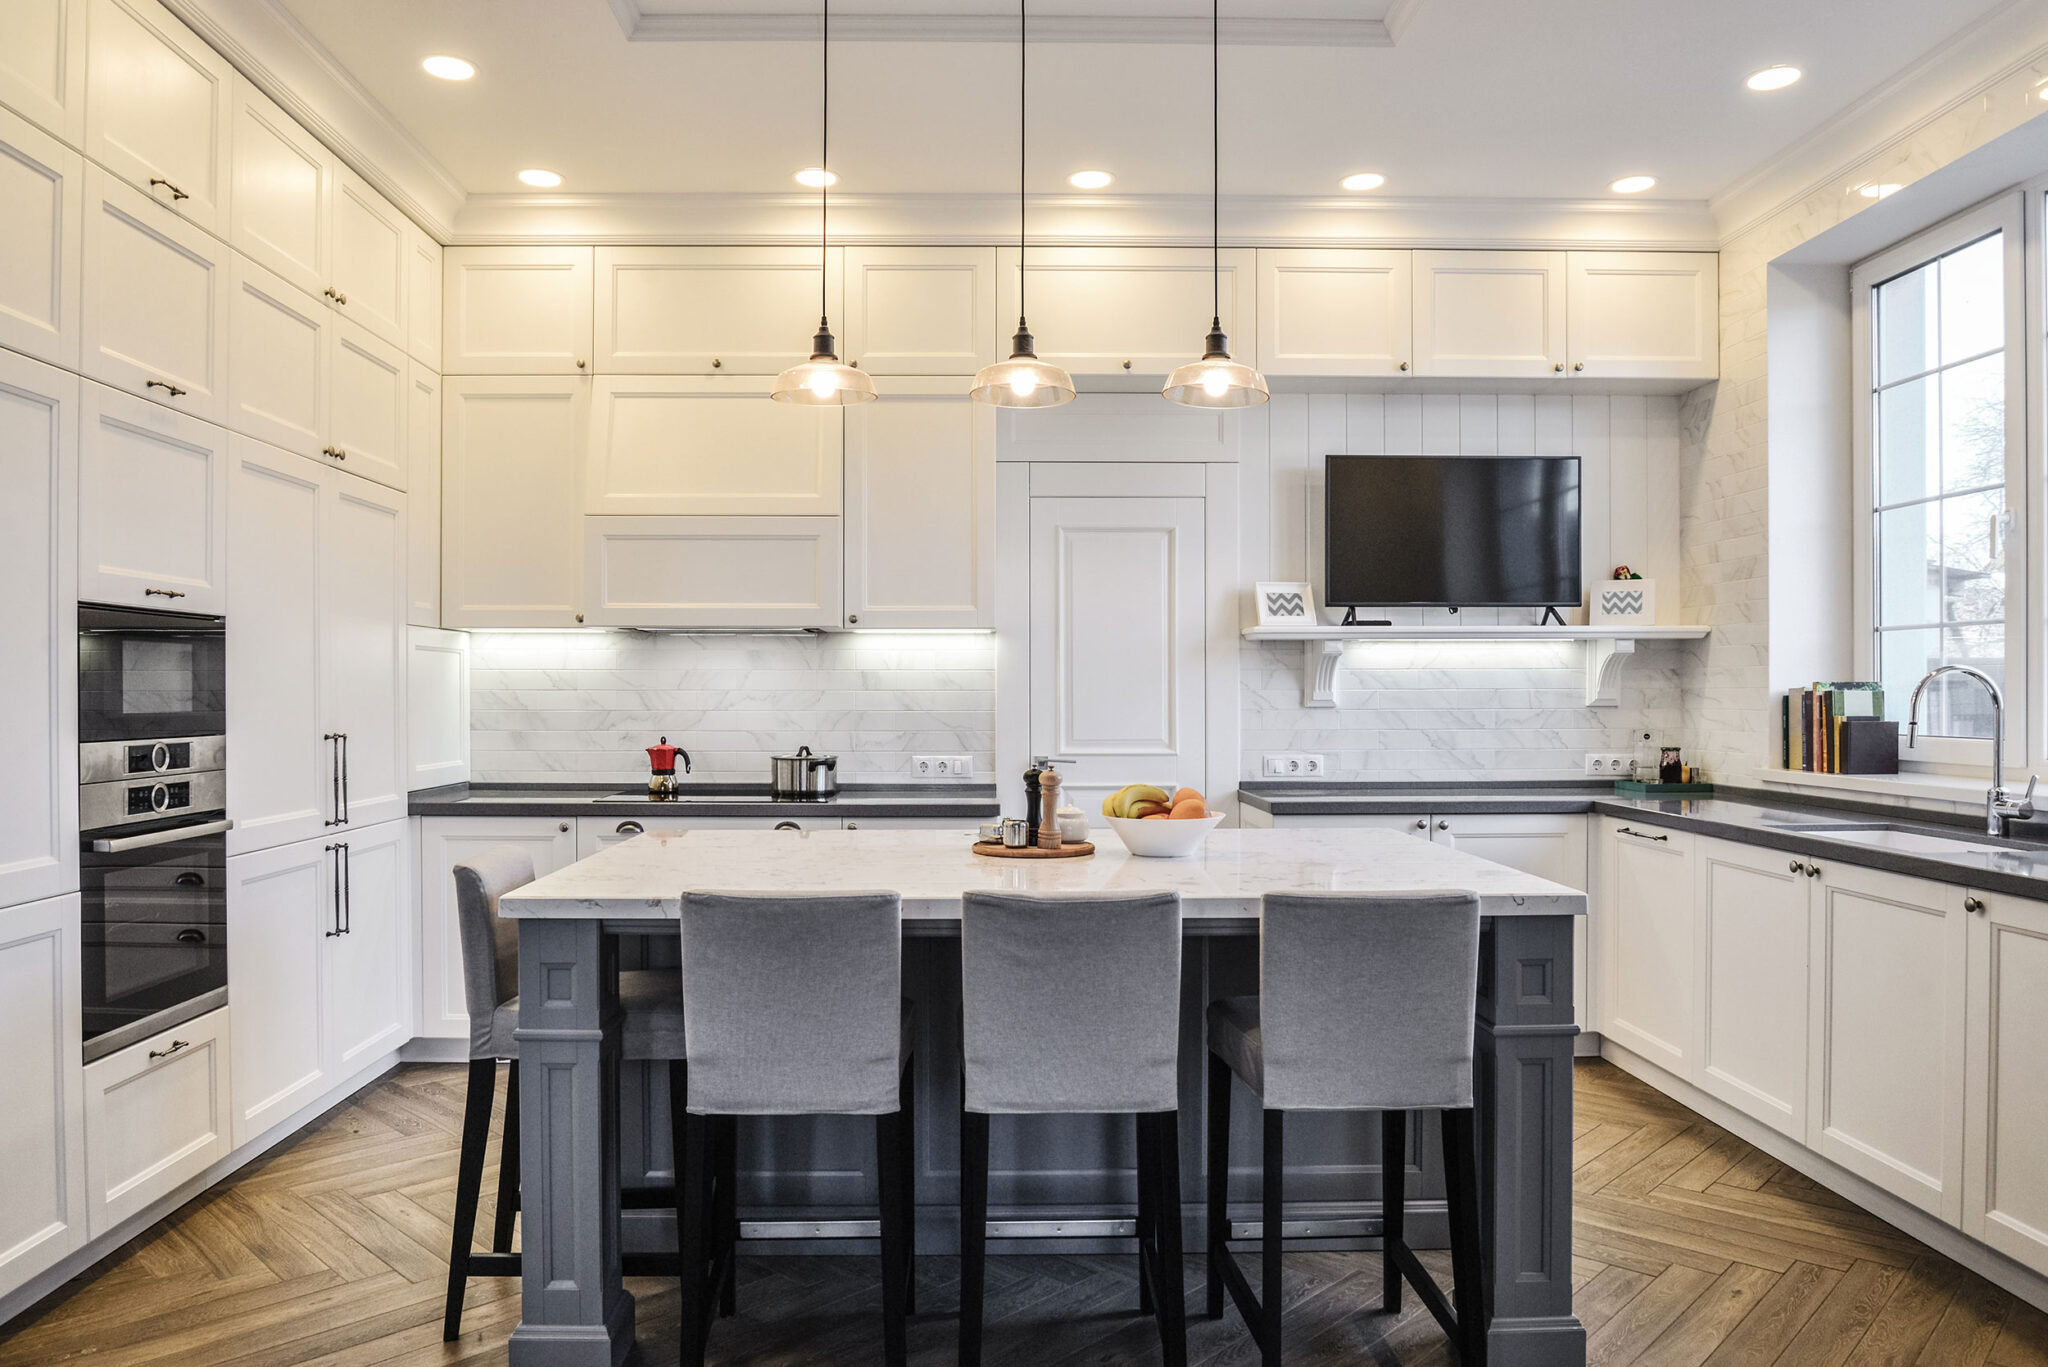 Understanding the Kitchen Cabinet Layout in Newer Homes